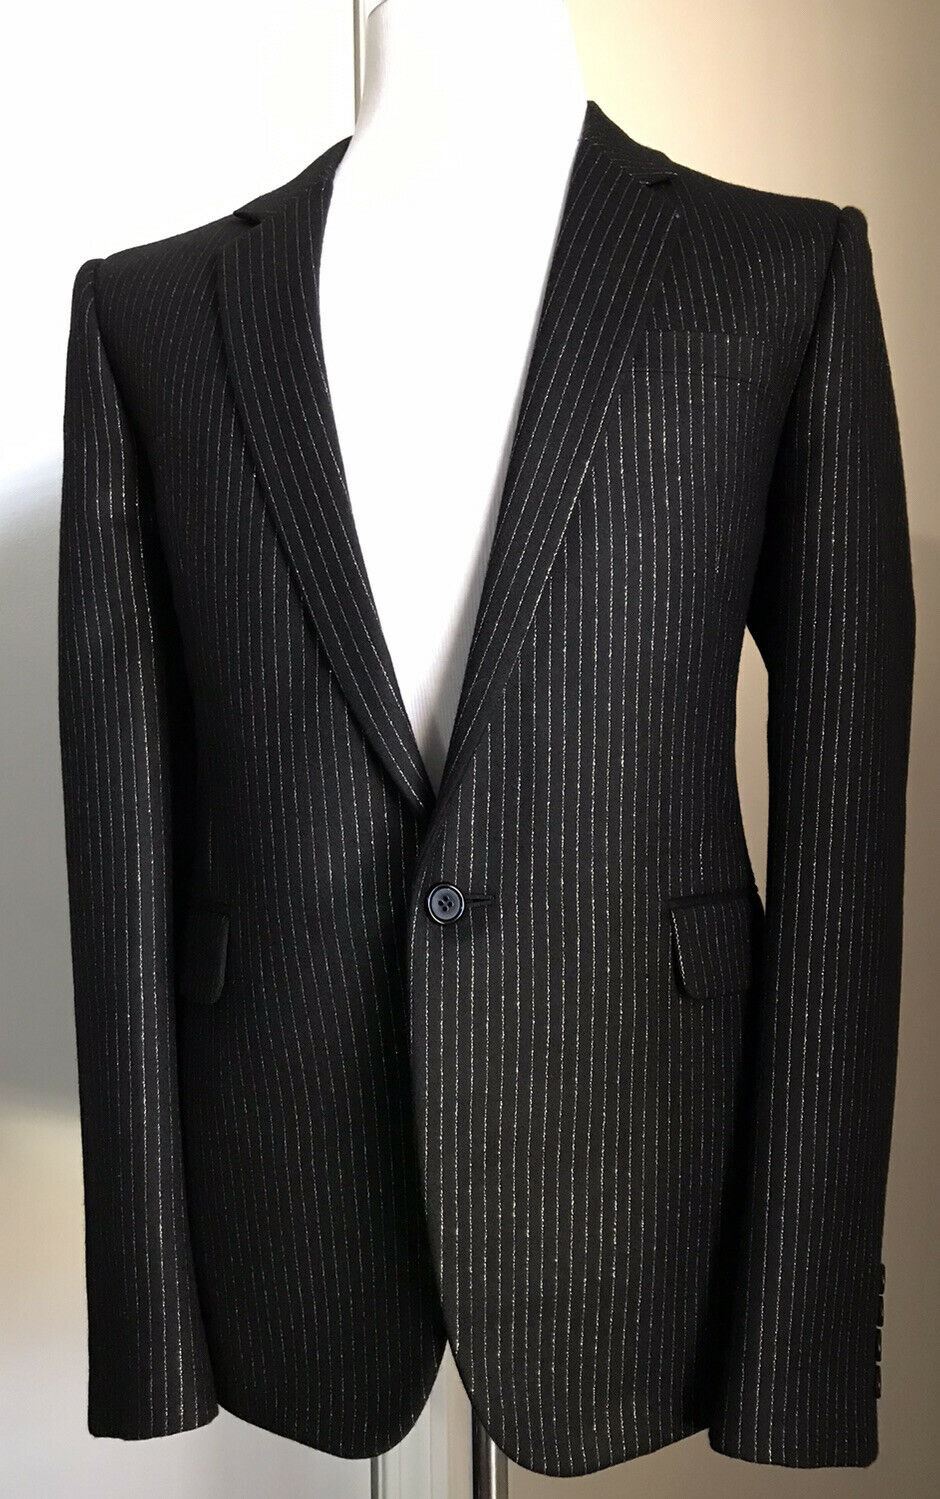 NWT $2490 Saint Laurent Men’s Jacket Blazer Black 42R US ( 52R Eu ) Italy